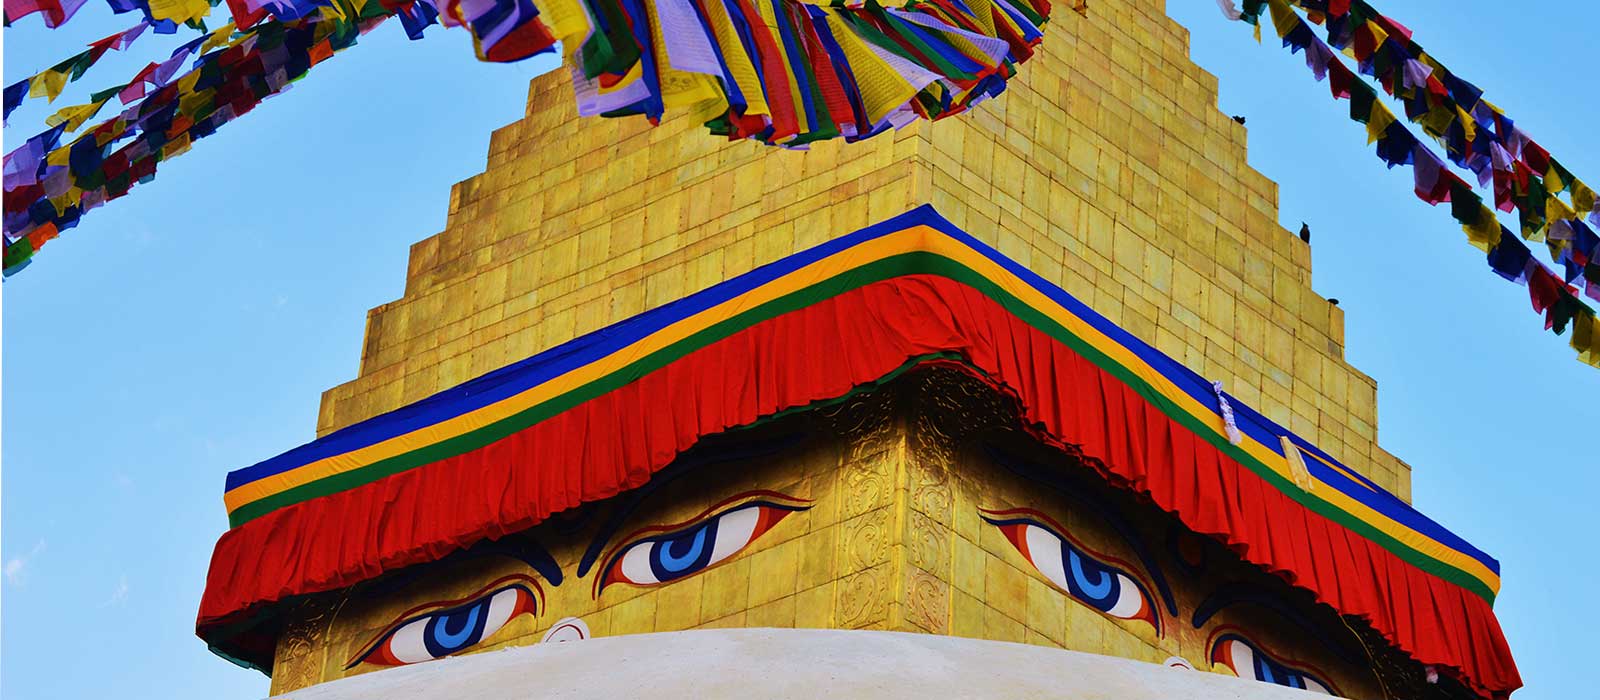 Bauddhanath-Buddha-eye